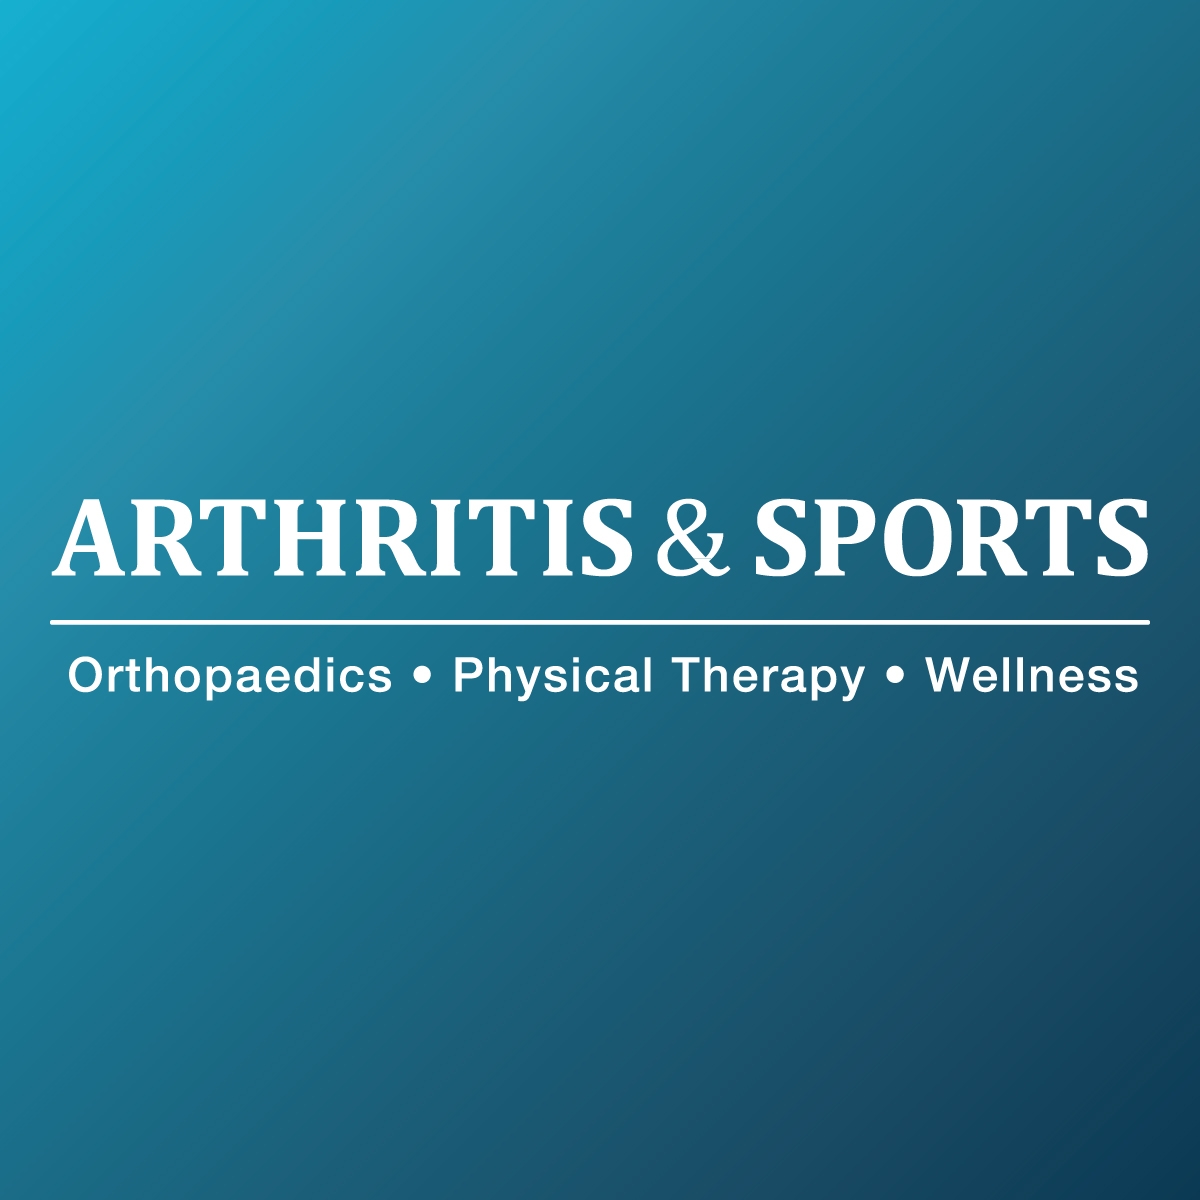 Arthritis & Sports Highlights How an Orthopedic Surgeon Can Help